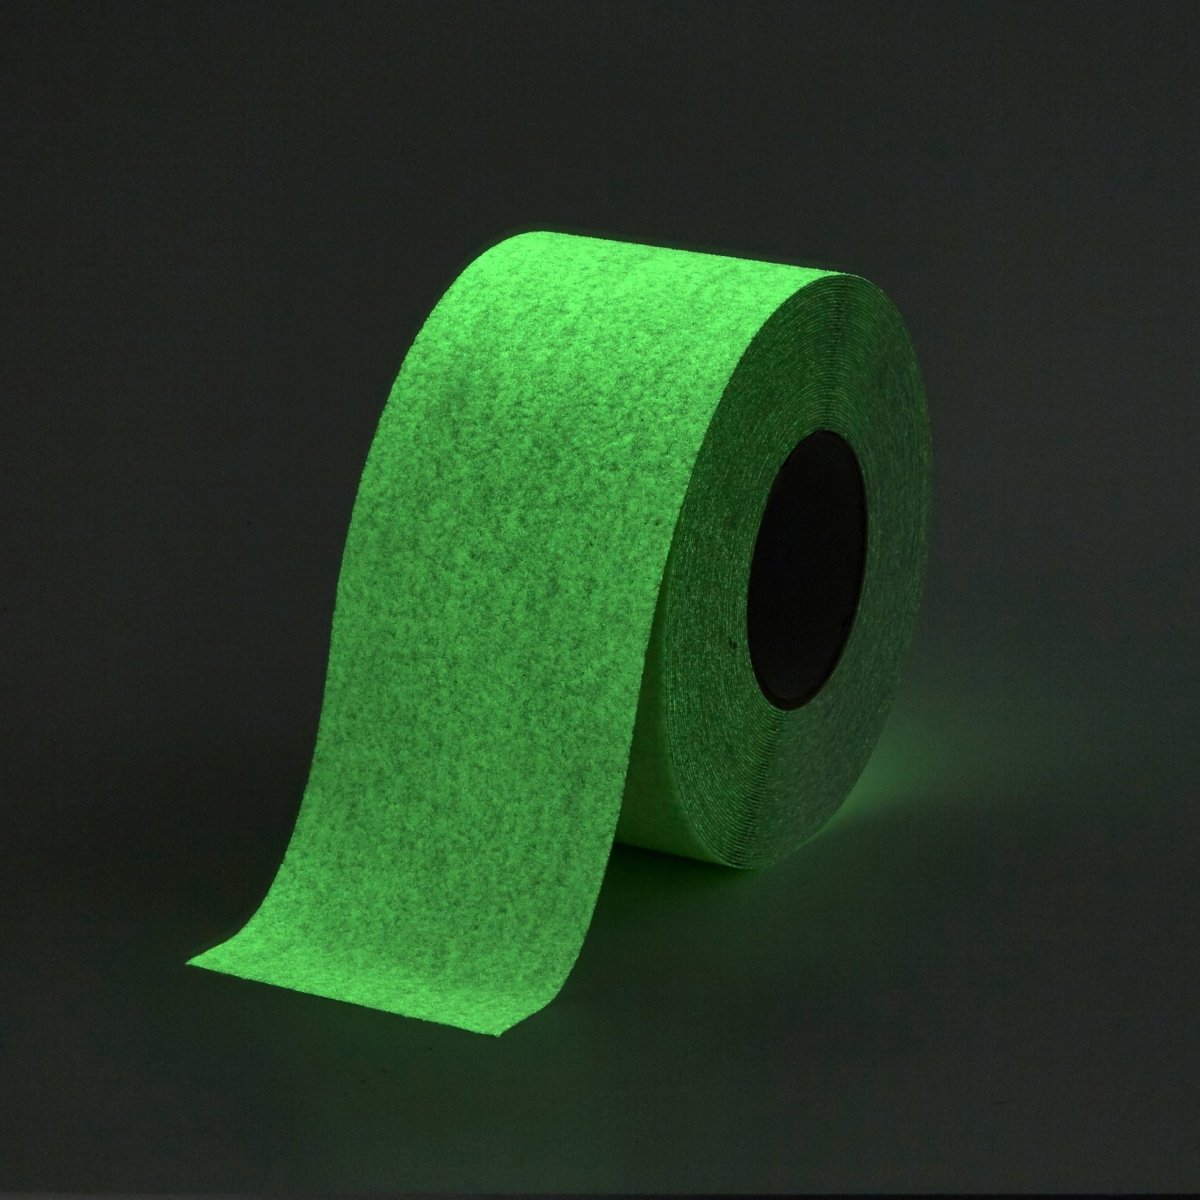 Luminous Glow in the Dark Anti Slip Tape Roll - Slips Away - H3403X-Glow-in-the-Dark-Standard-Safety-Grip-100mm-N-V2 -